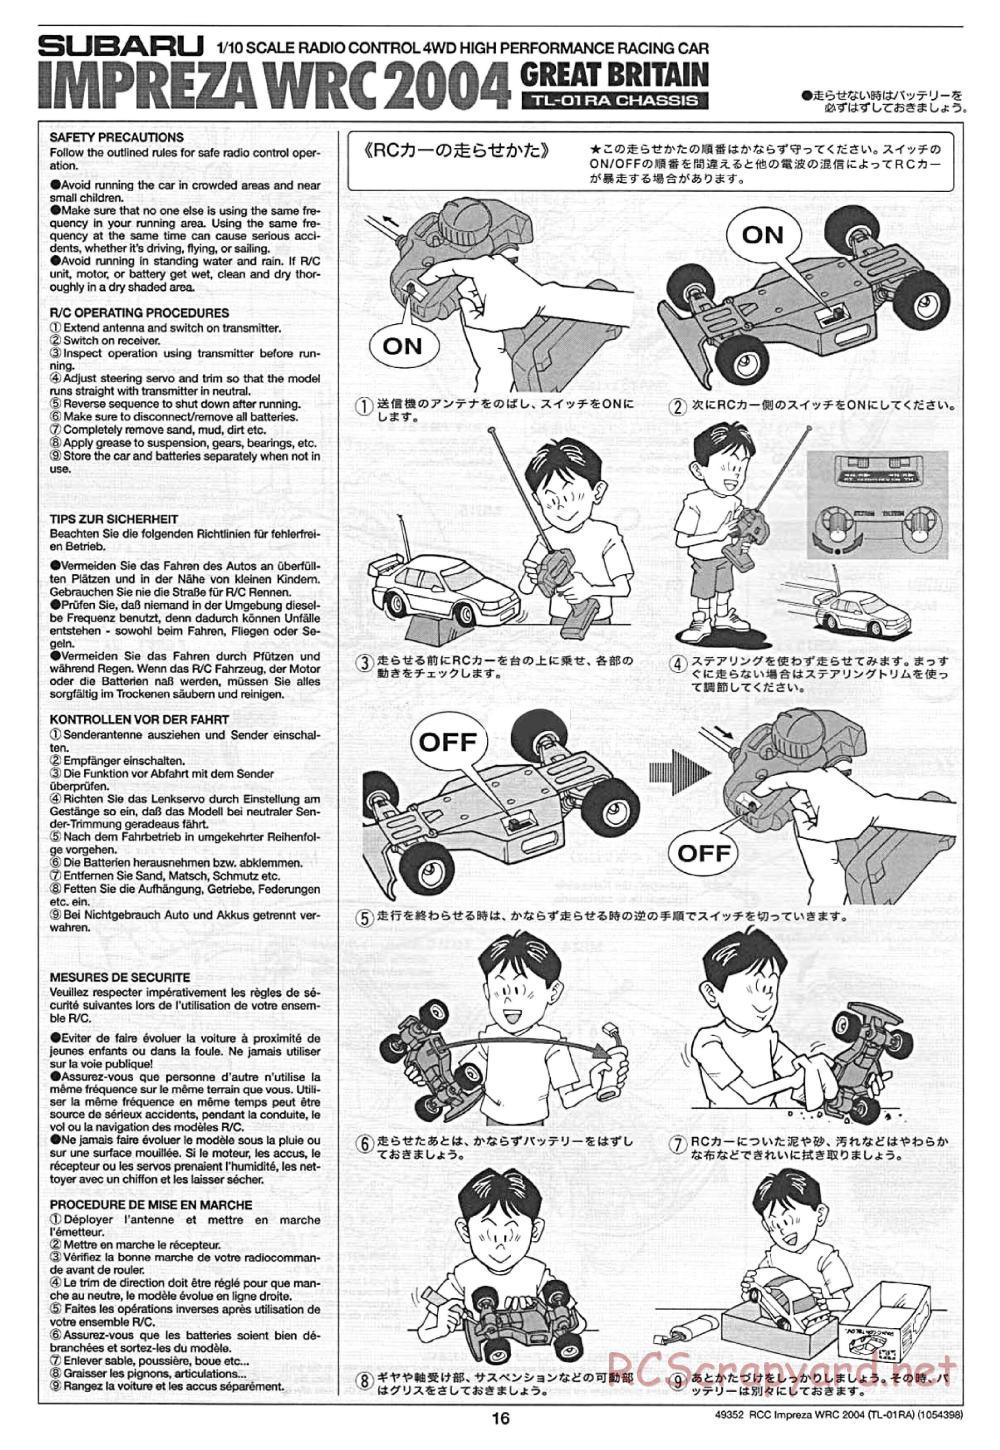 Tamiya - Subaru Impreza WRC 2004 Chassis - Manual - Page 16